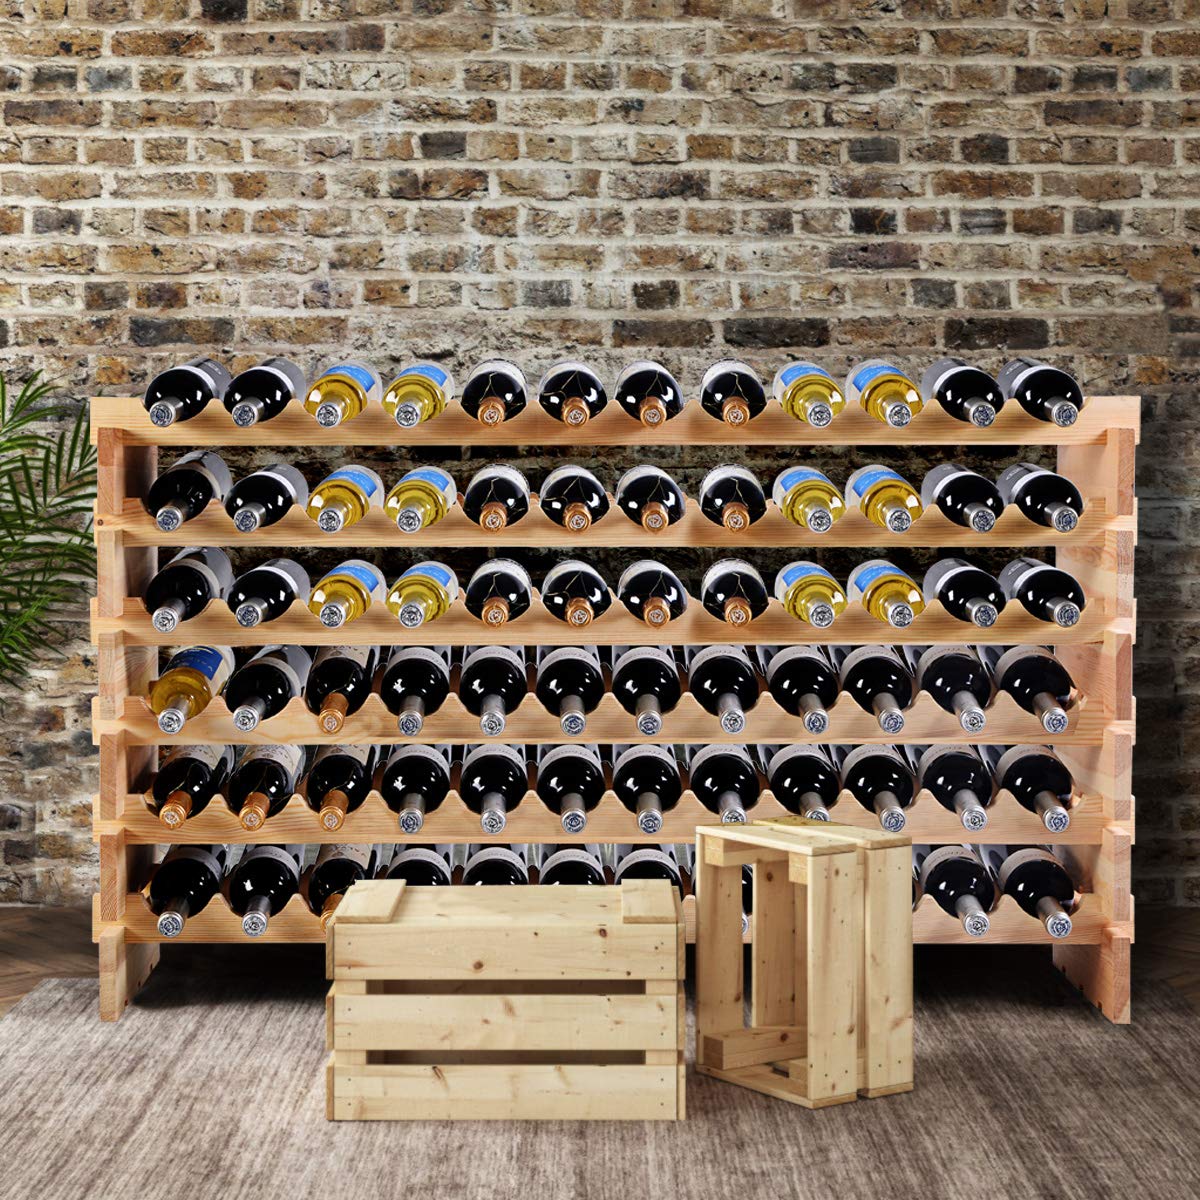 Giantex 72 Bottle Wine Rack Modular Bottle Display Shelves Wood Stackable Storage